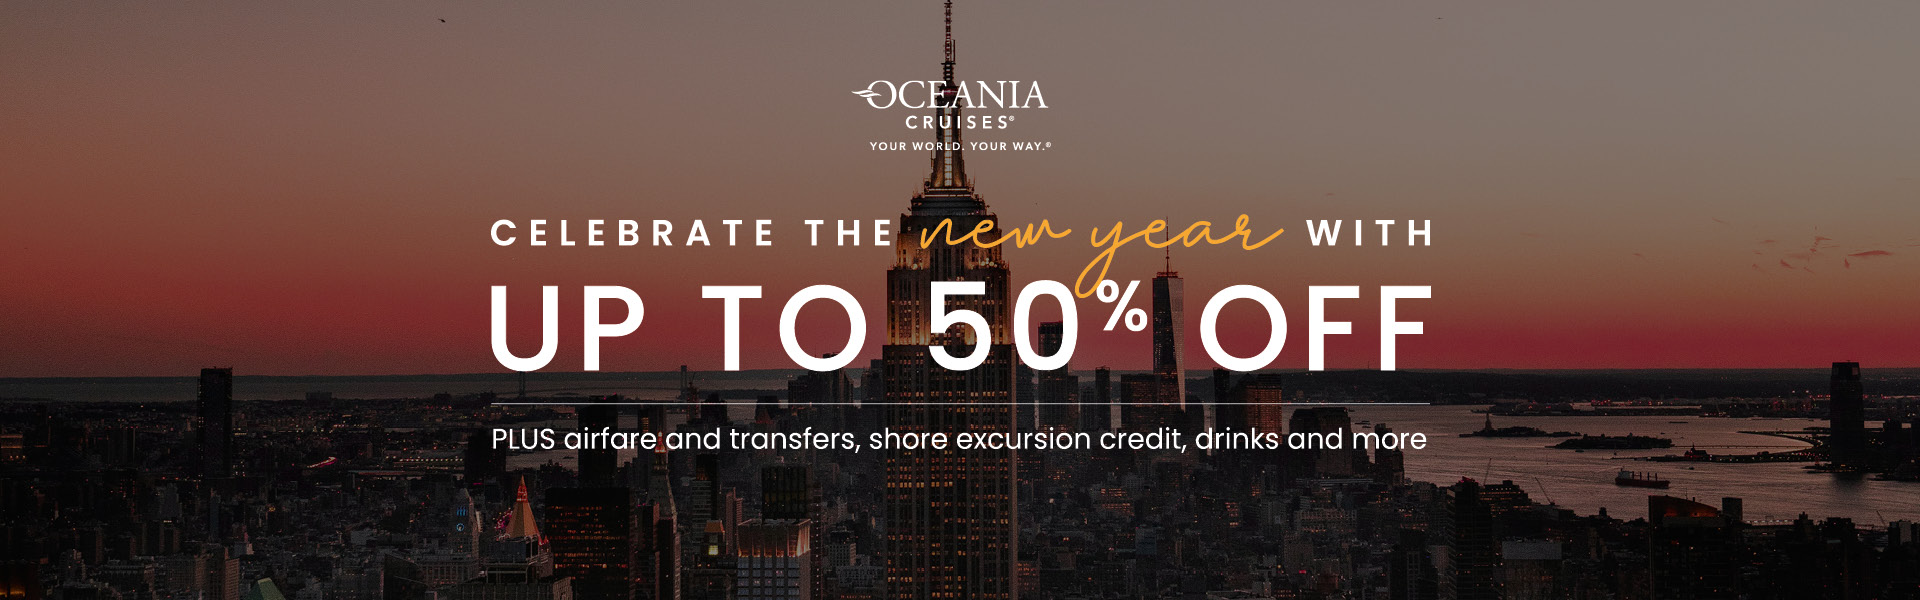 Oceania Cruises New Year Sale